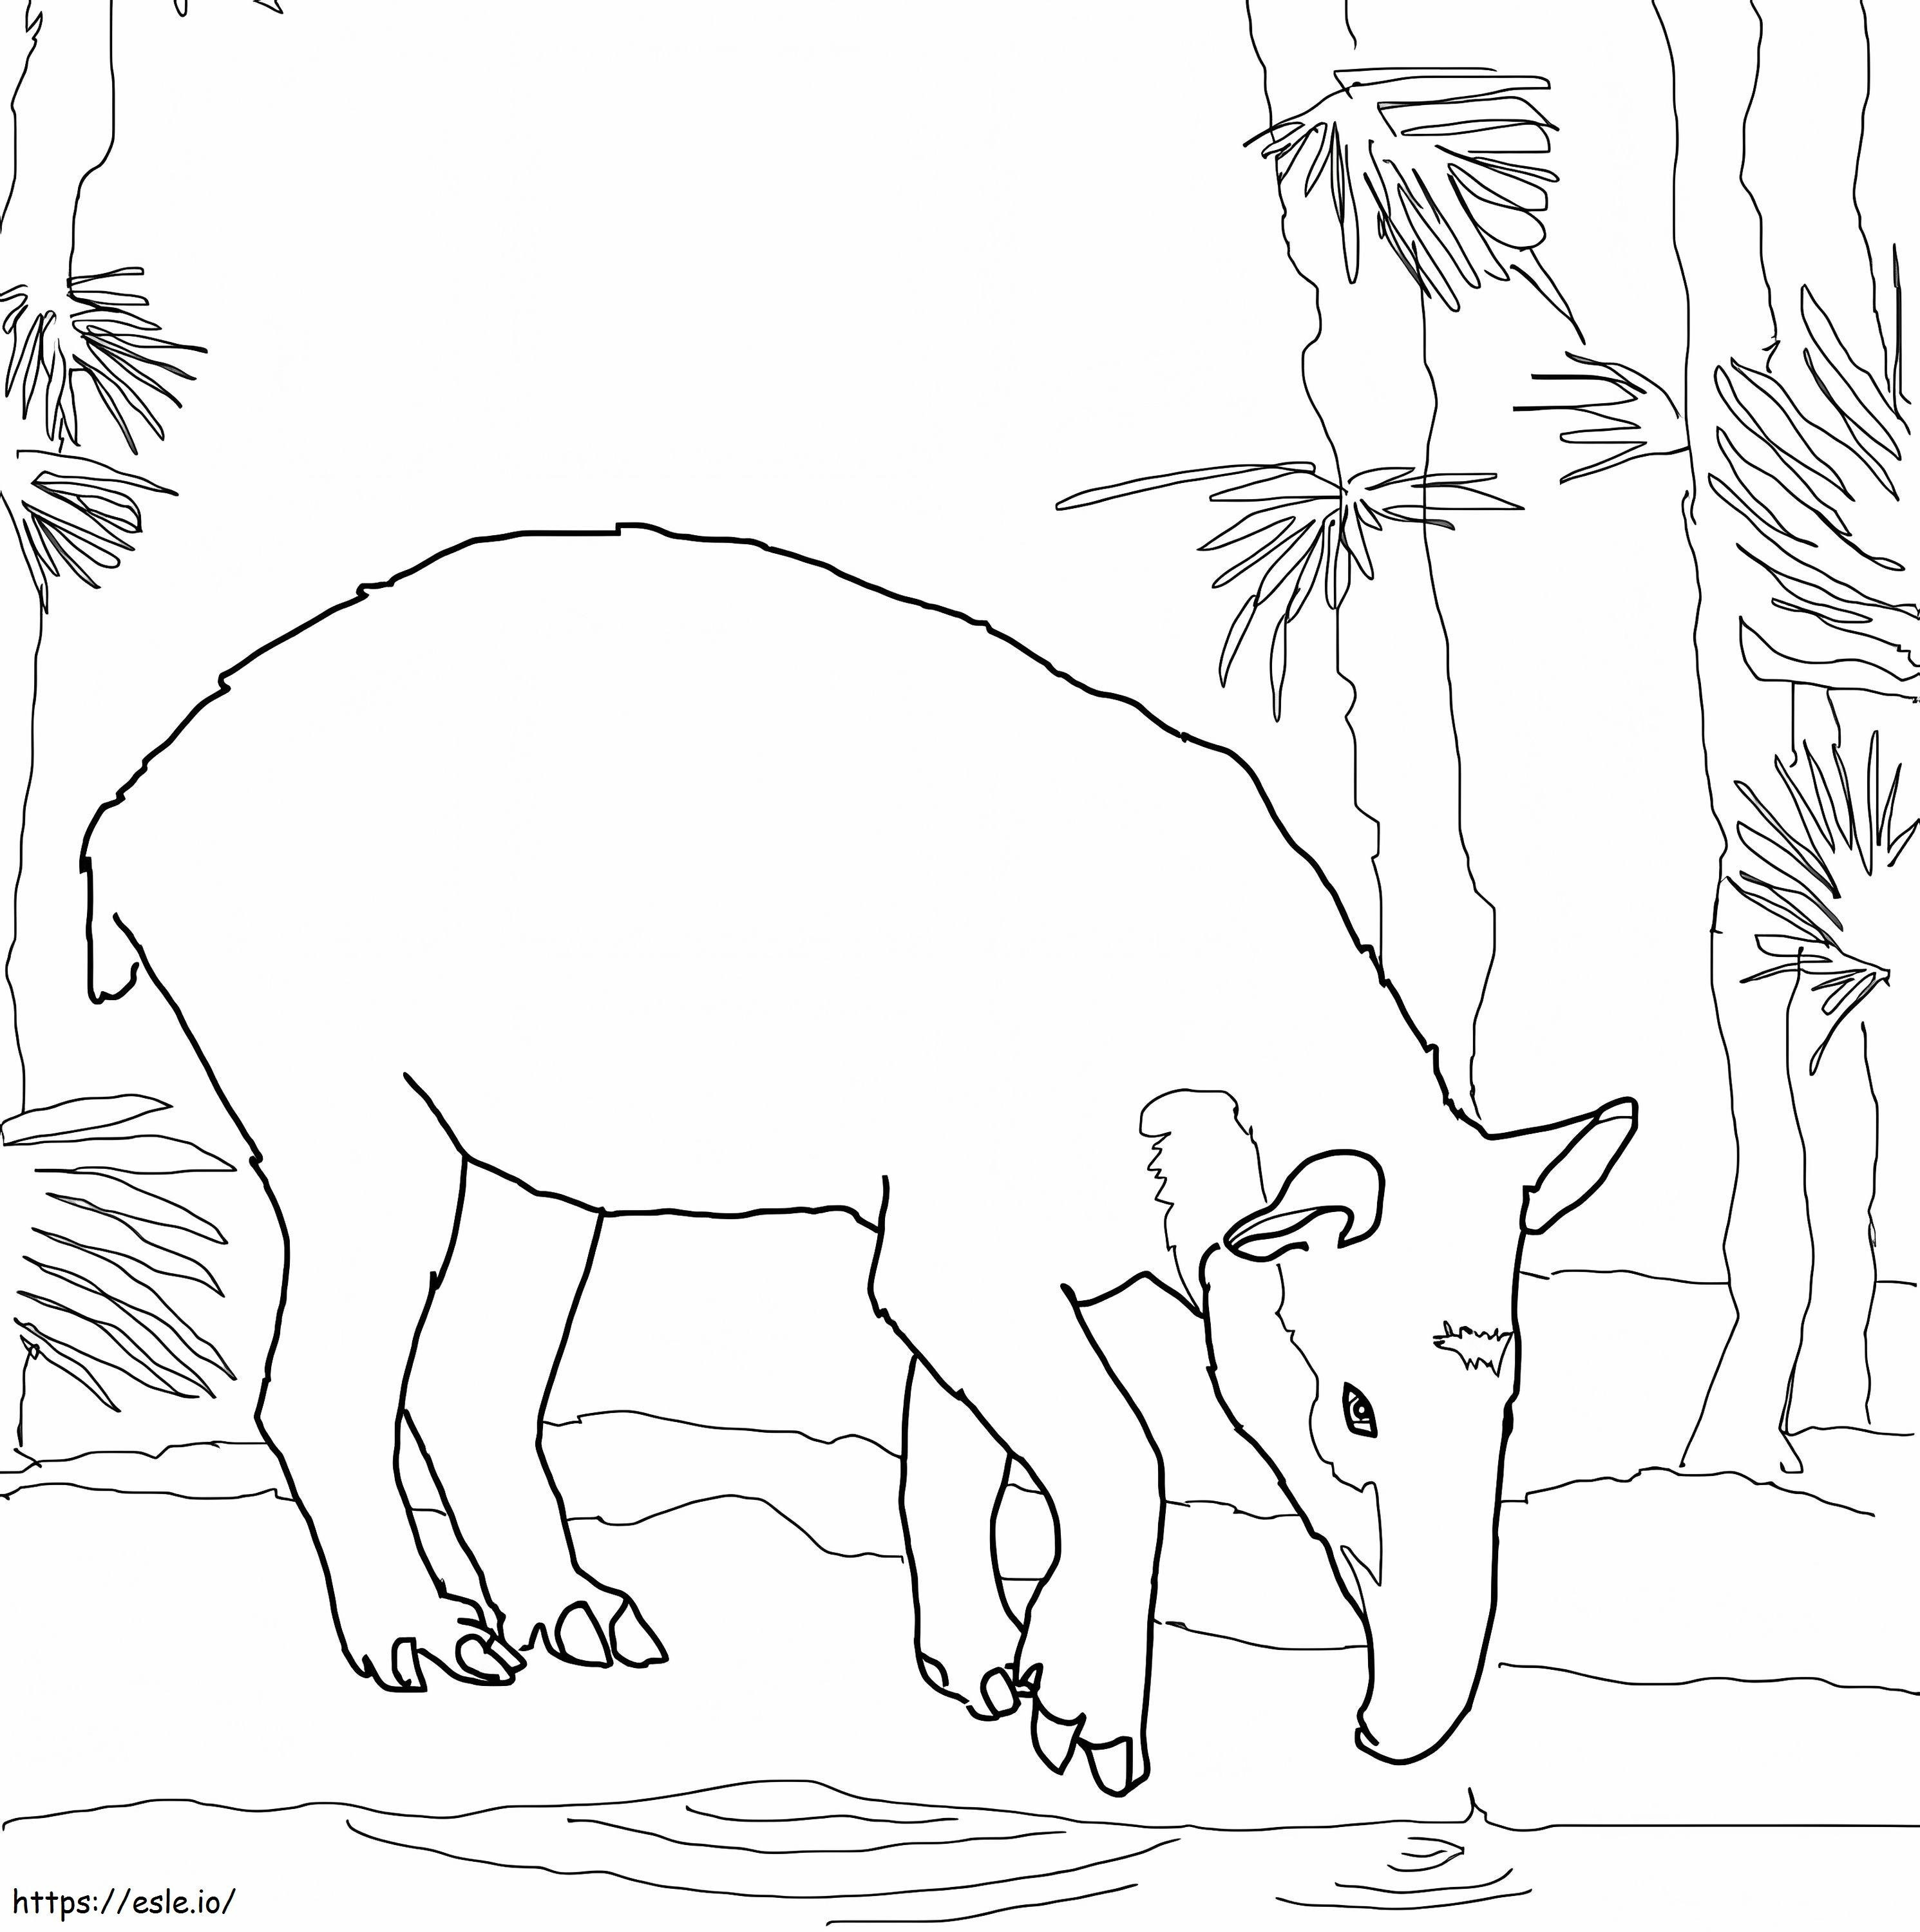 Coloriage Tapir de Baird à imprimer dessin